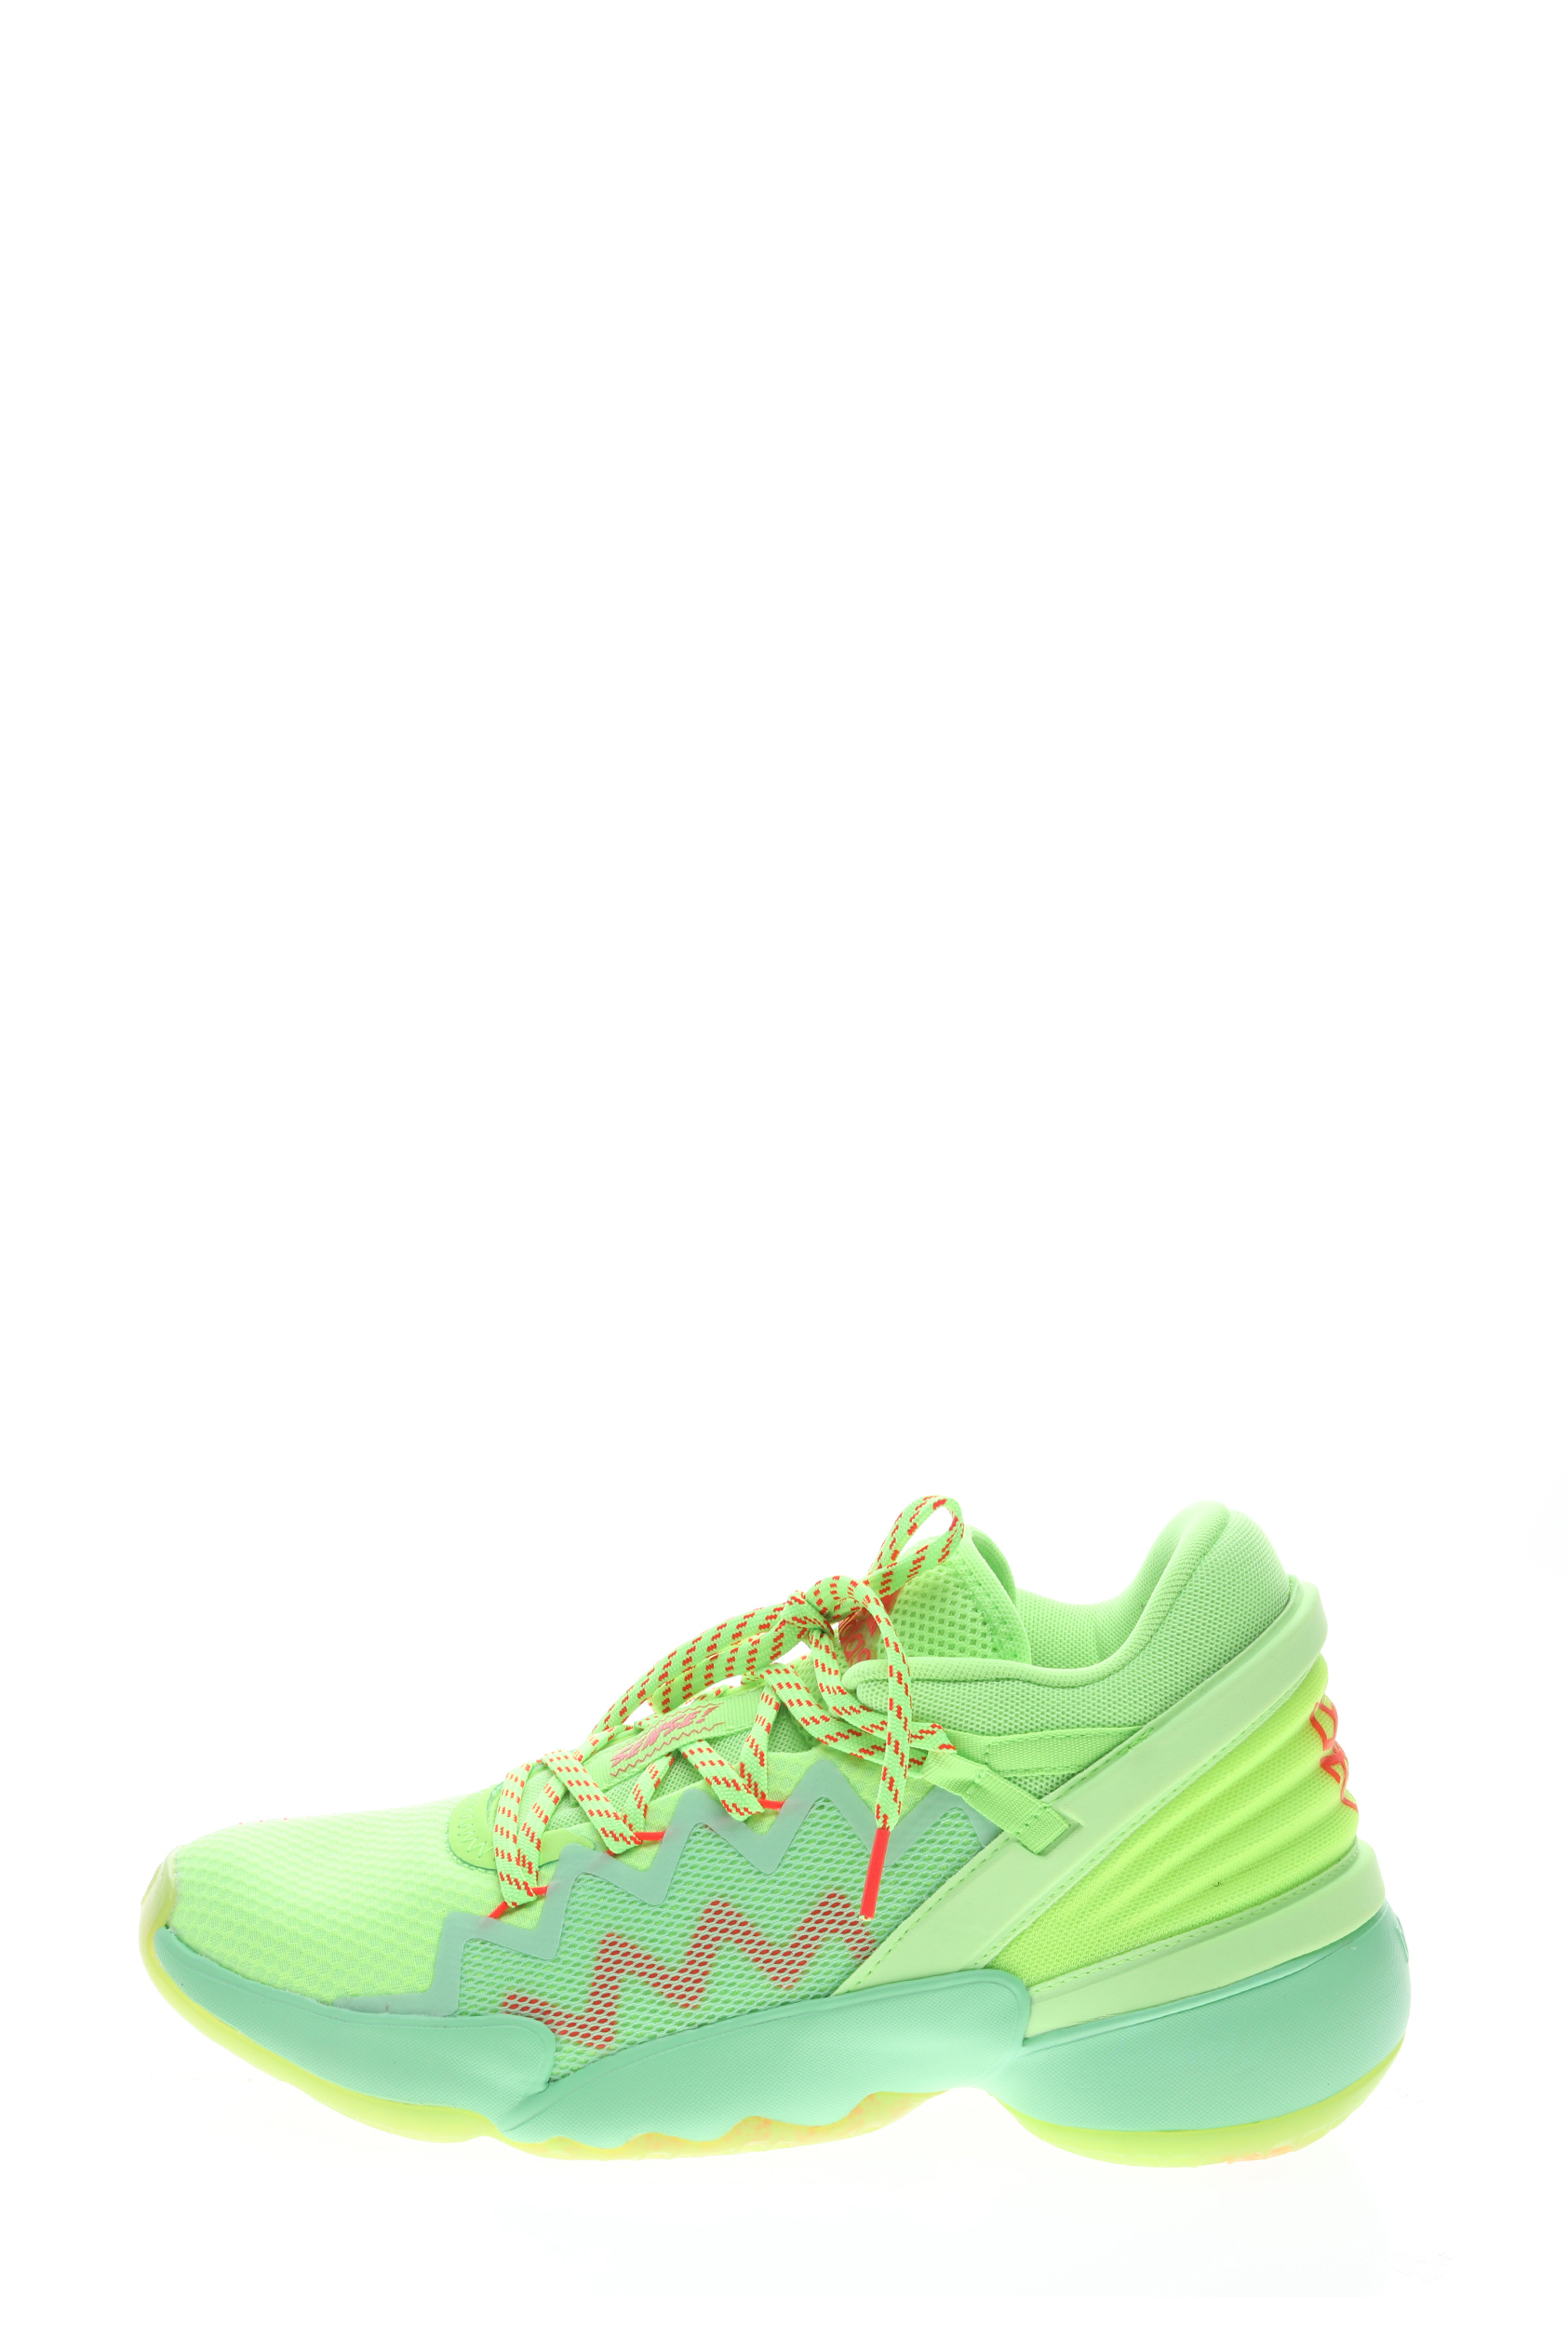 adidas Performance - Unisex παπούτσια basketball adidas Performance D.O.N. Issue 2 πράσινα Ανδρικά/Παπούτσια/Αθλητικά/Running